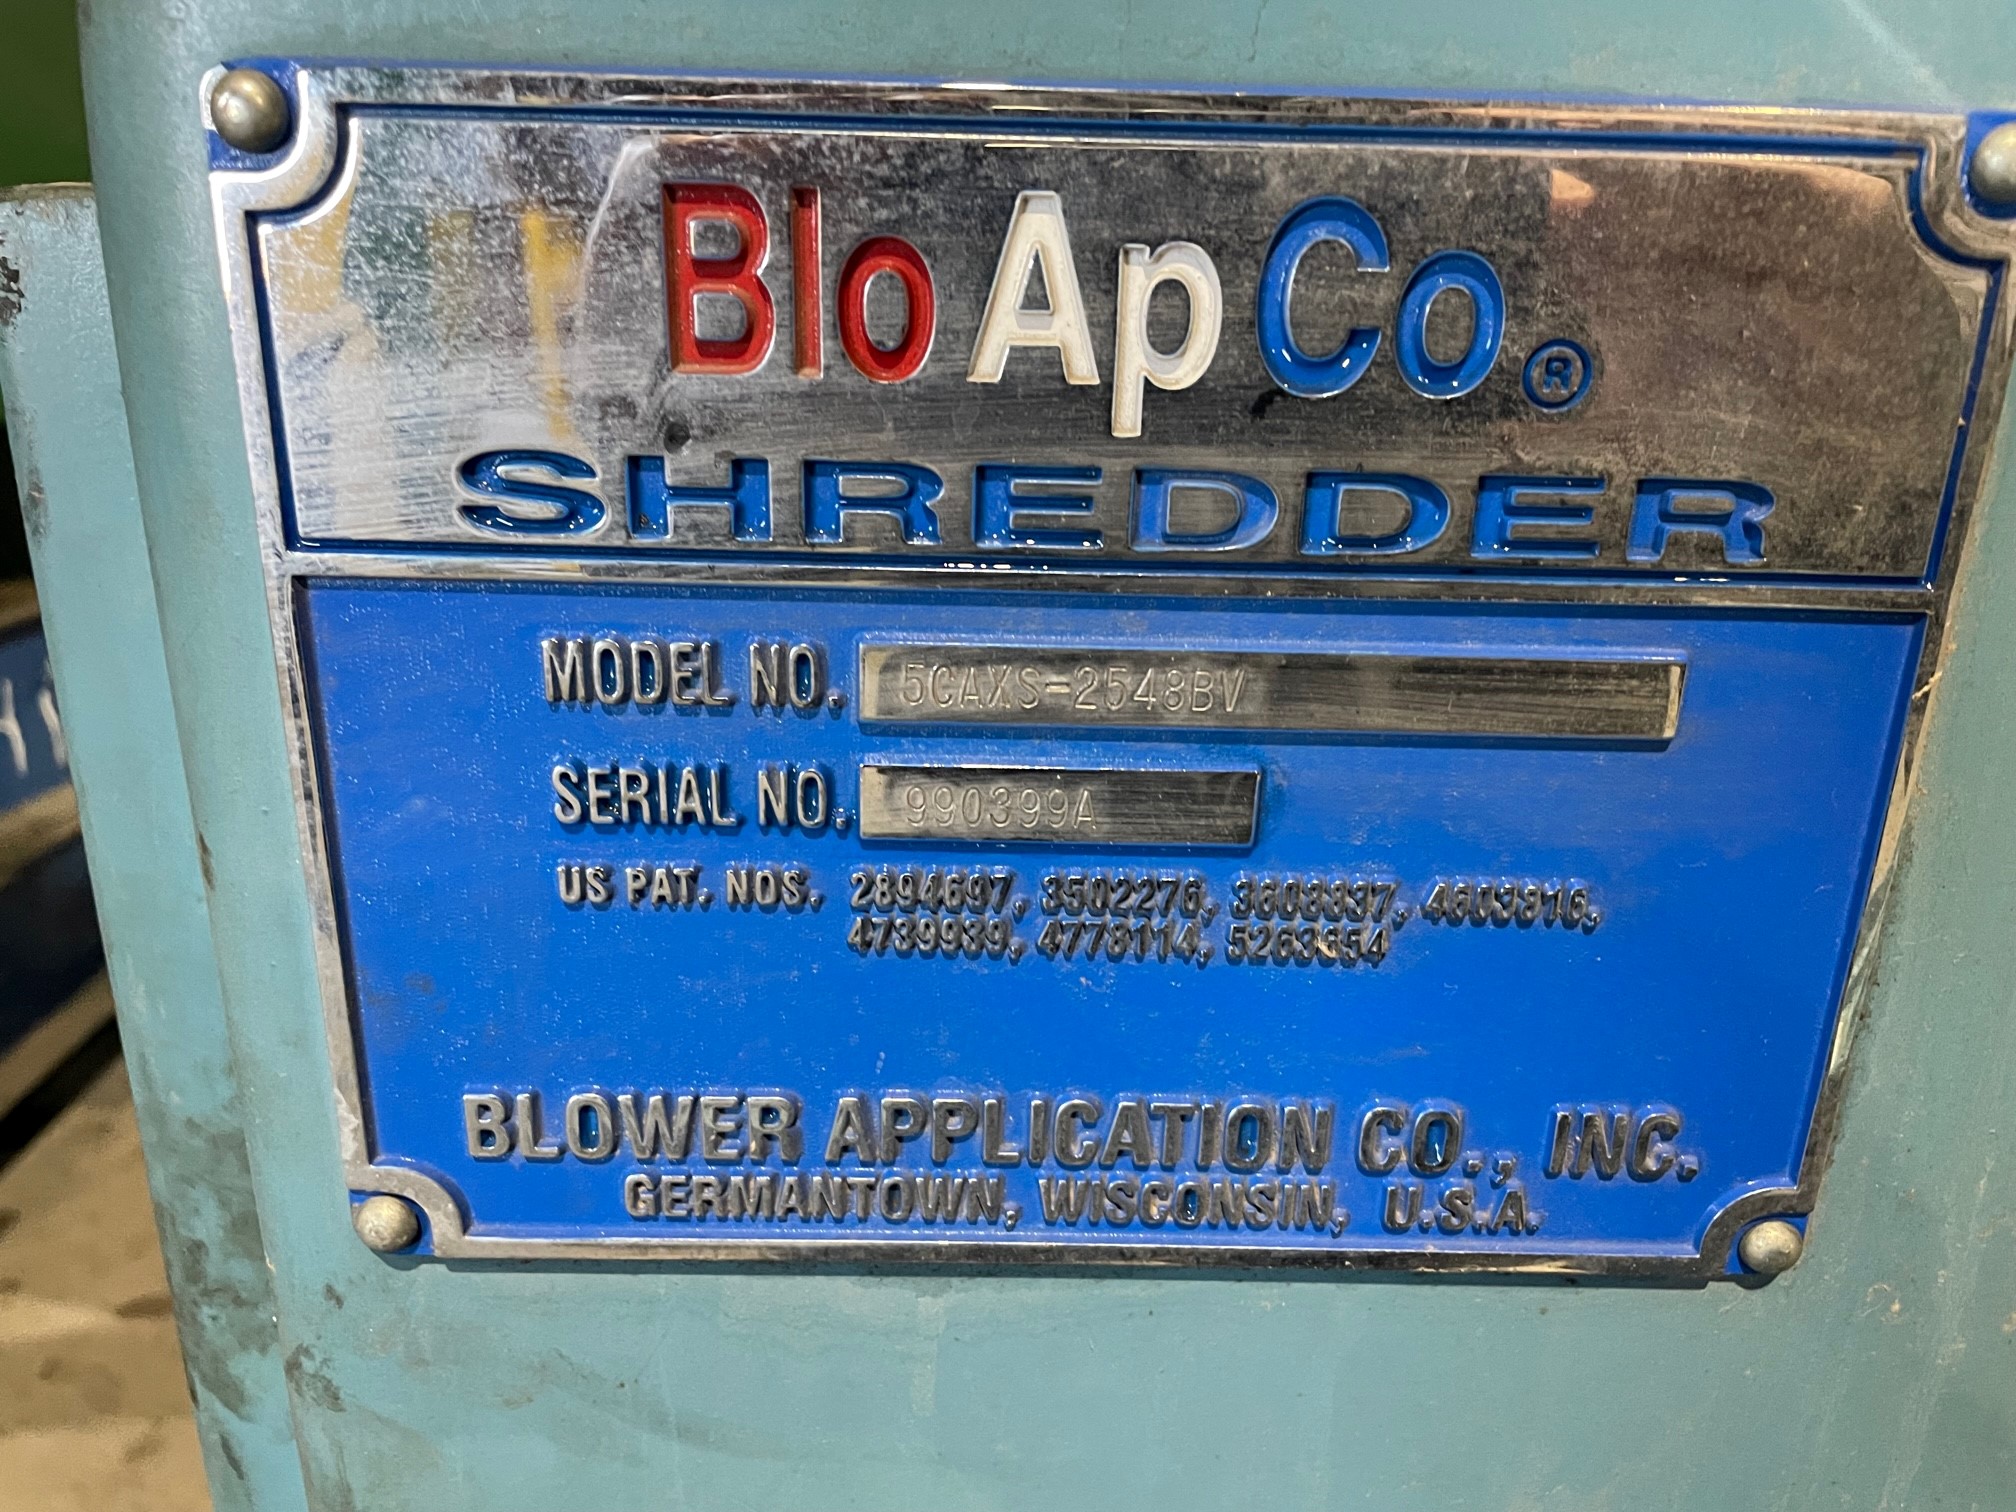 9196 BloApCo 5CAXS 2548BV Shredder Name plate LG